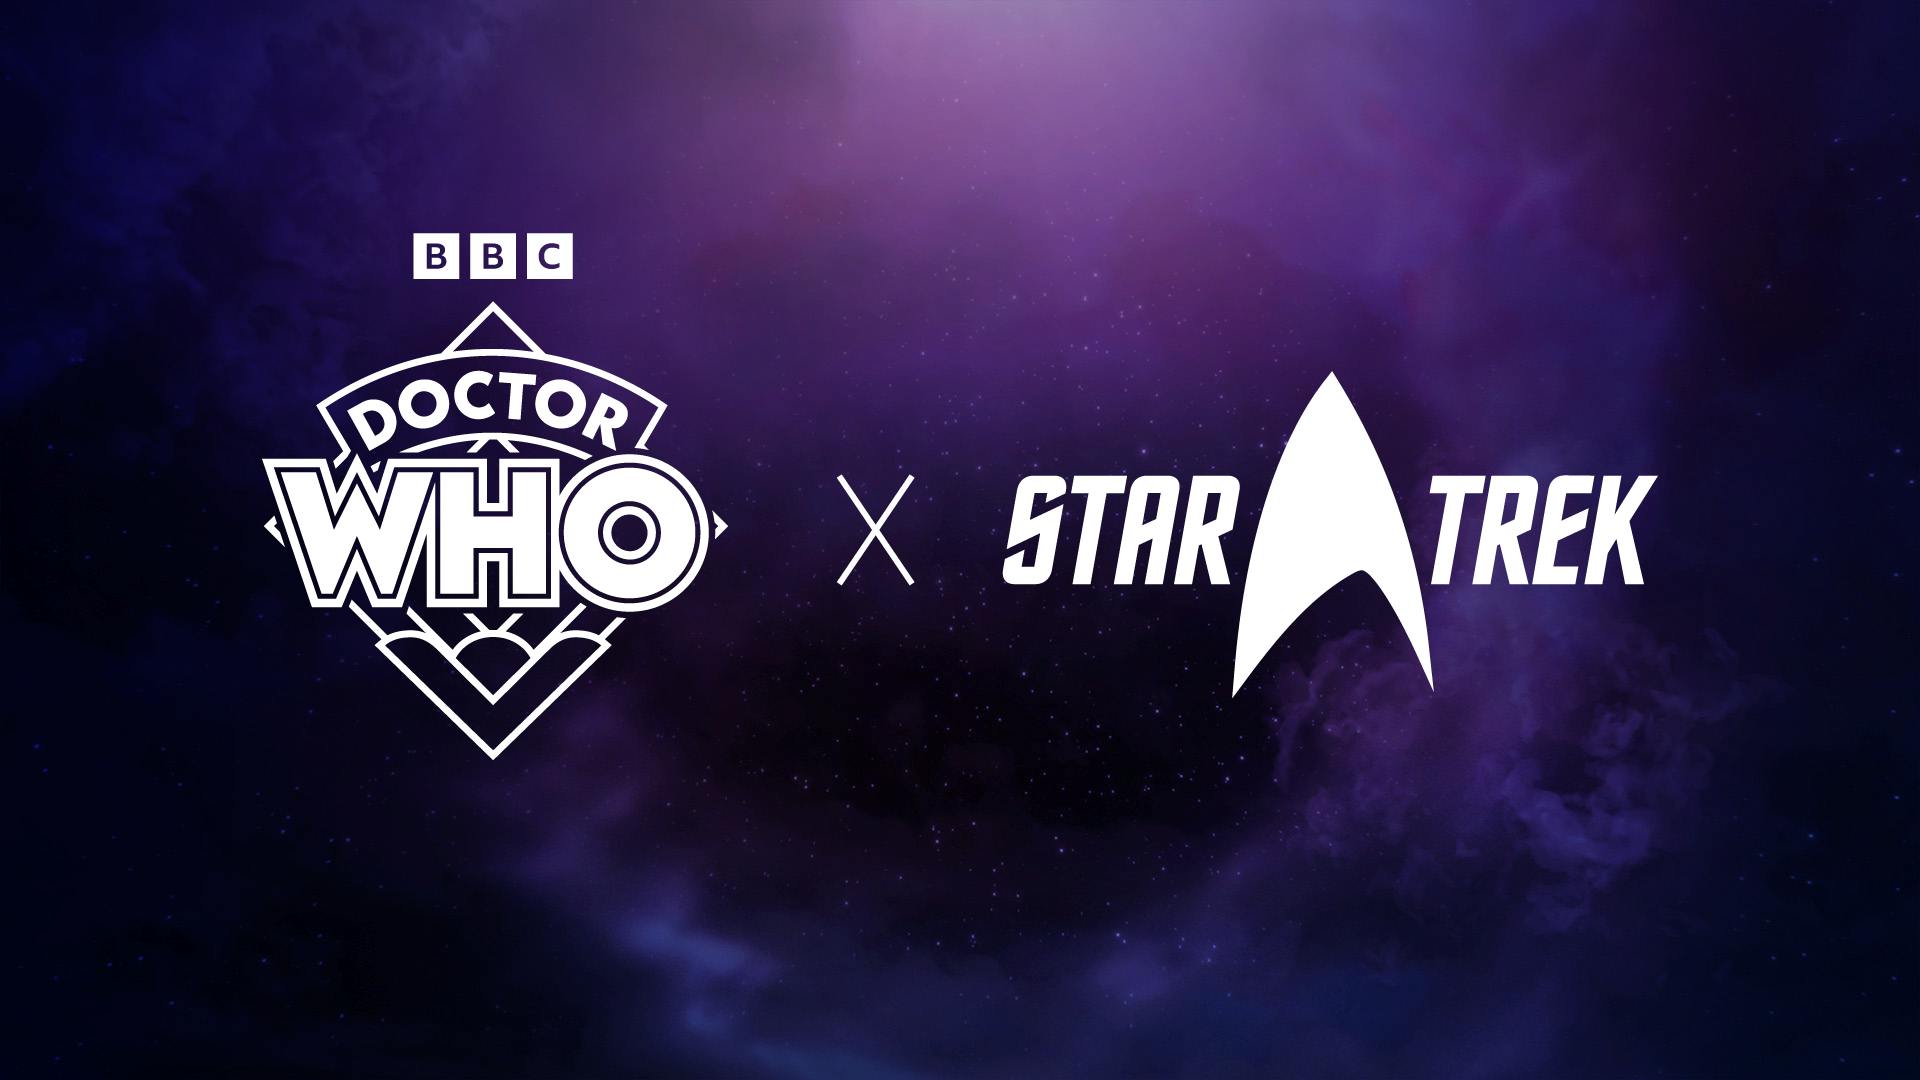 BBC Doctor Who brand logo x Star Trek brand logo against a nebula background